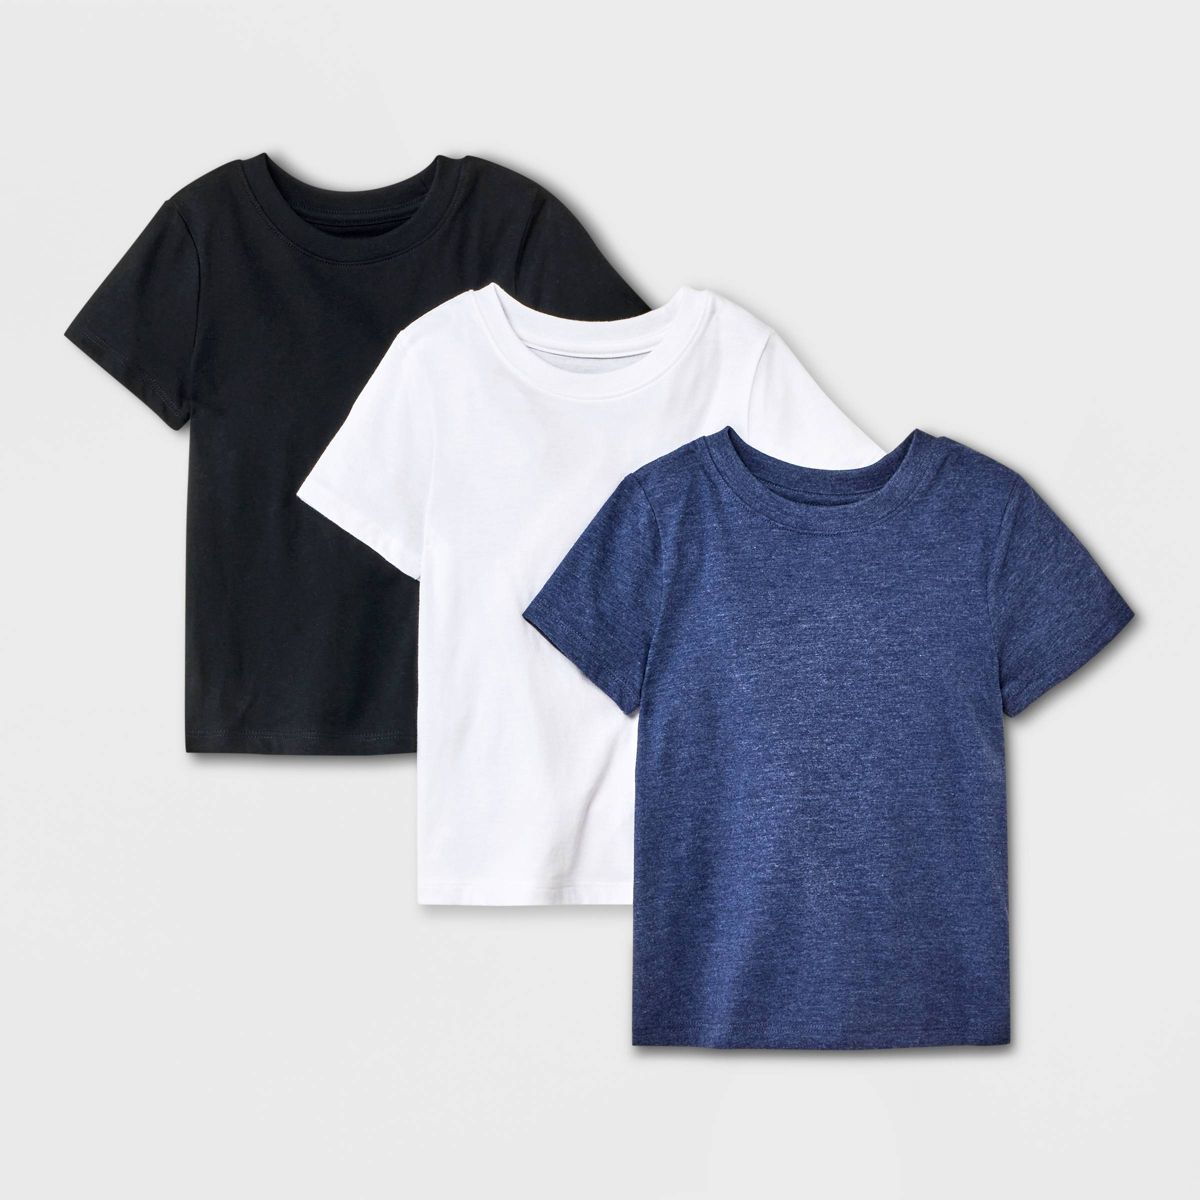 Toddler Boys' 3pk Short Sleeve T-Shirt - Cat & Jack™ Black/Navy Blue/White | Target